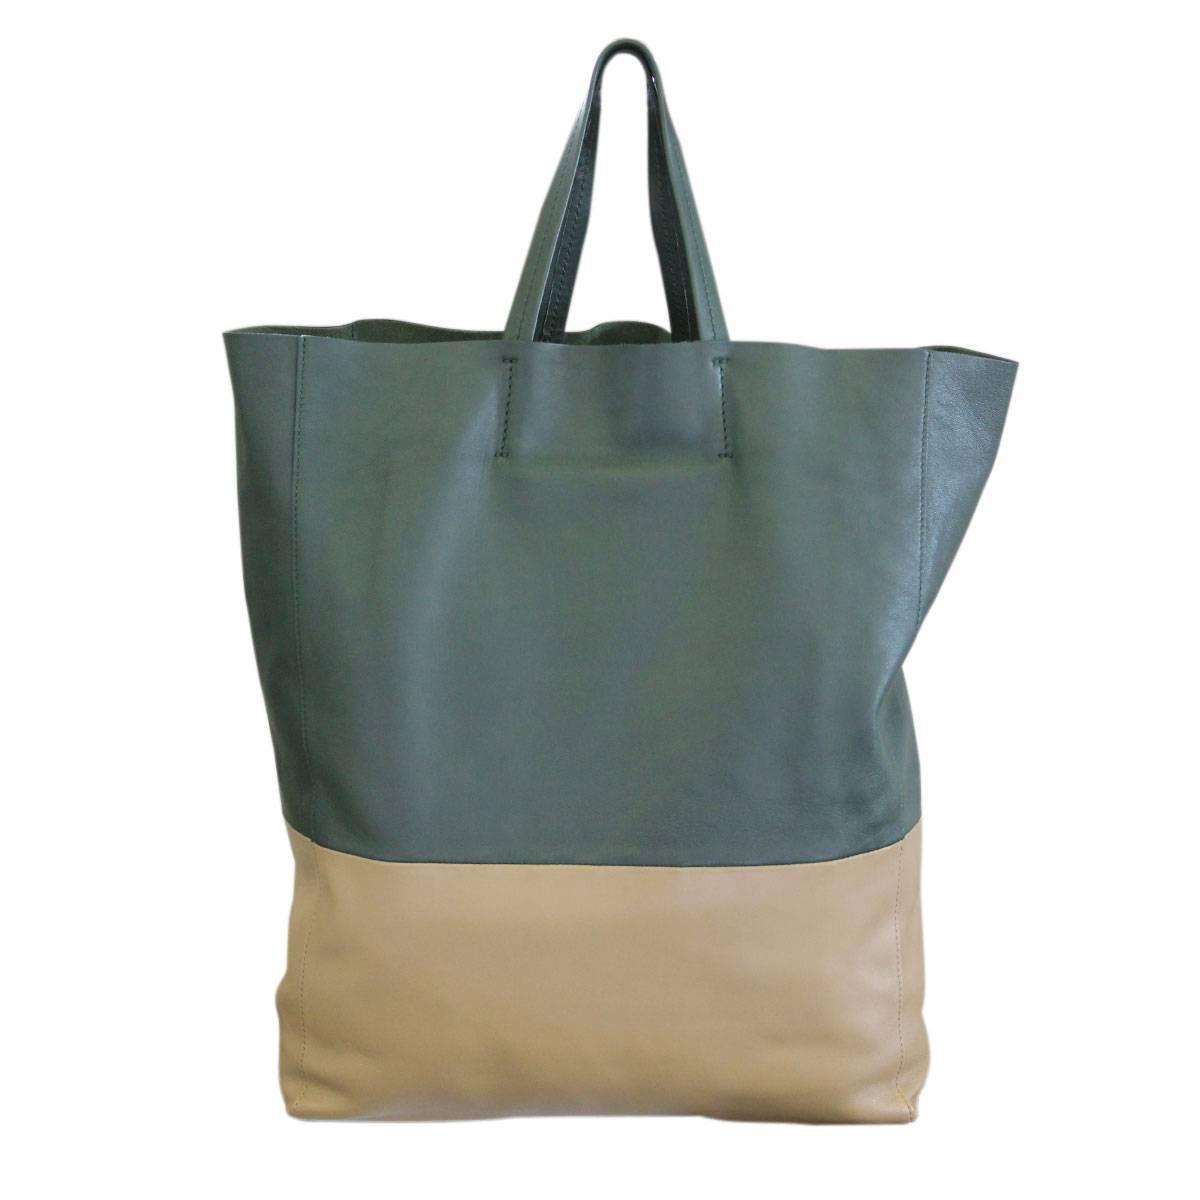 celine bags prices - Celine Vertical Bi-Cabas Green Khaki Two Tone Tote Bag at 1stdibs